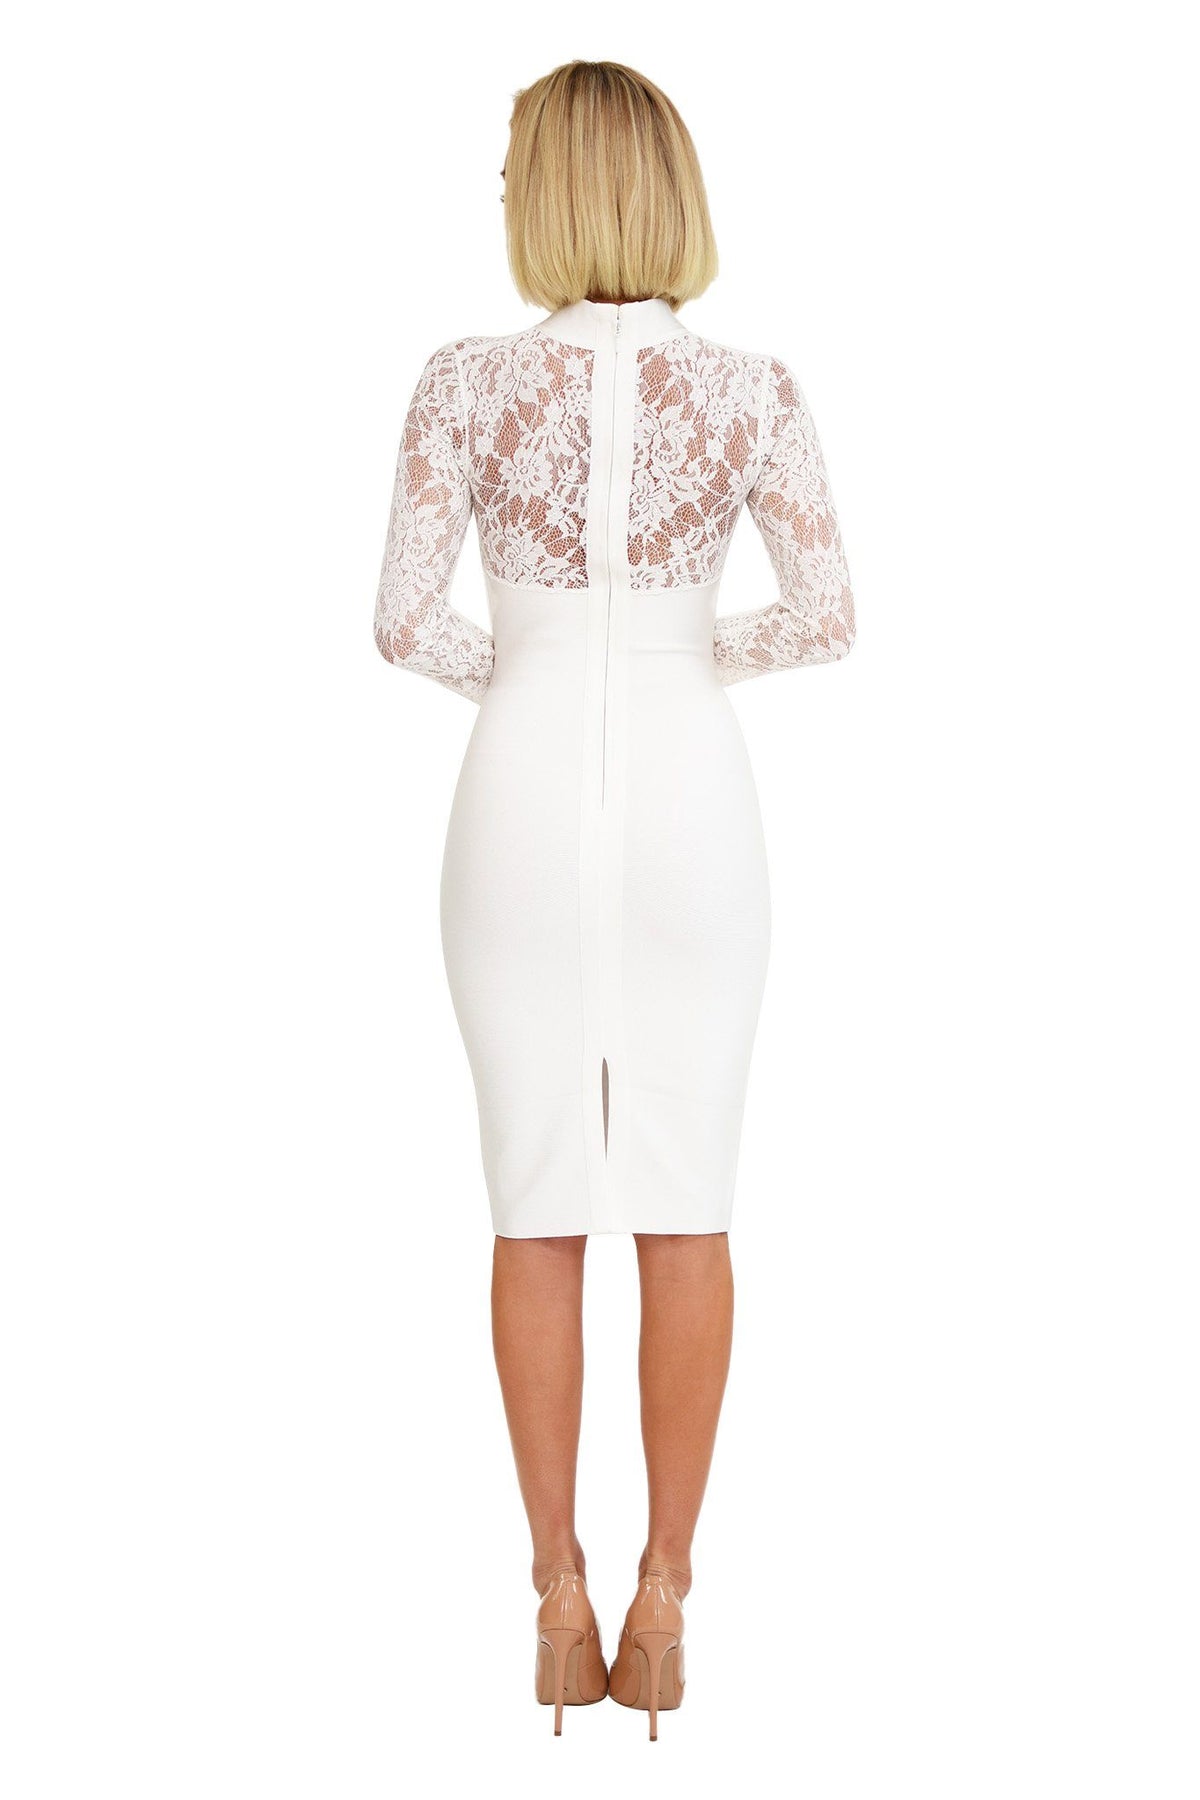 Sheer lace back design with a slit of white lace long-sleeve midi-length bandage dress